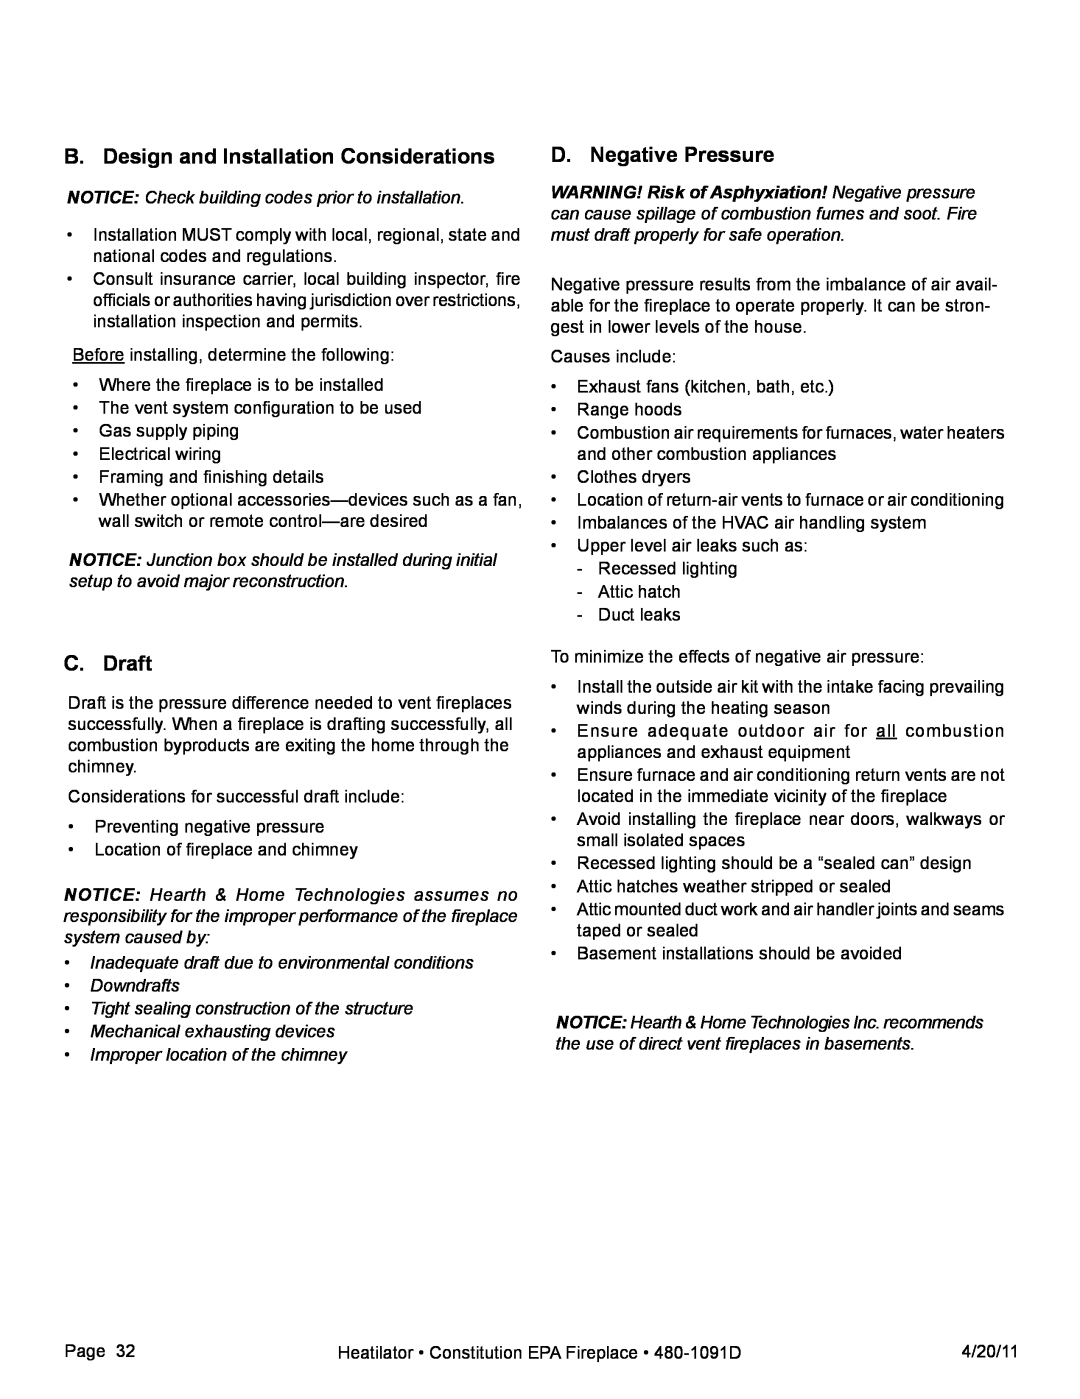 Heatiator C40 owner manual B. Design and Installation Considerations, C. Draft, D. Negative Pressure 